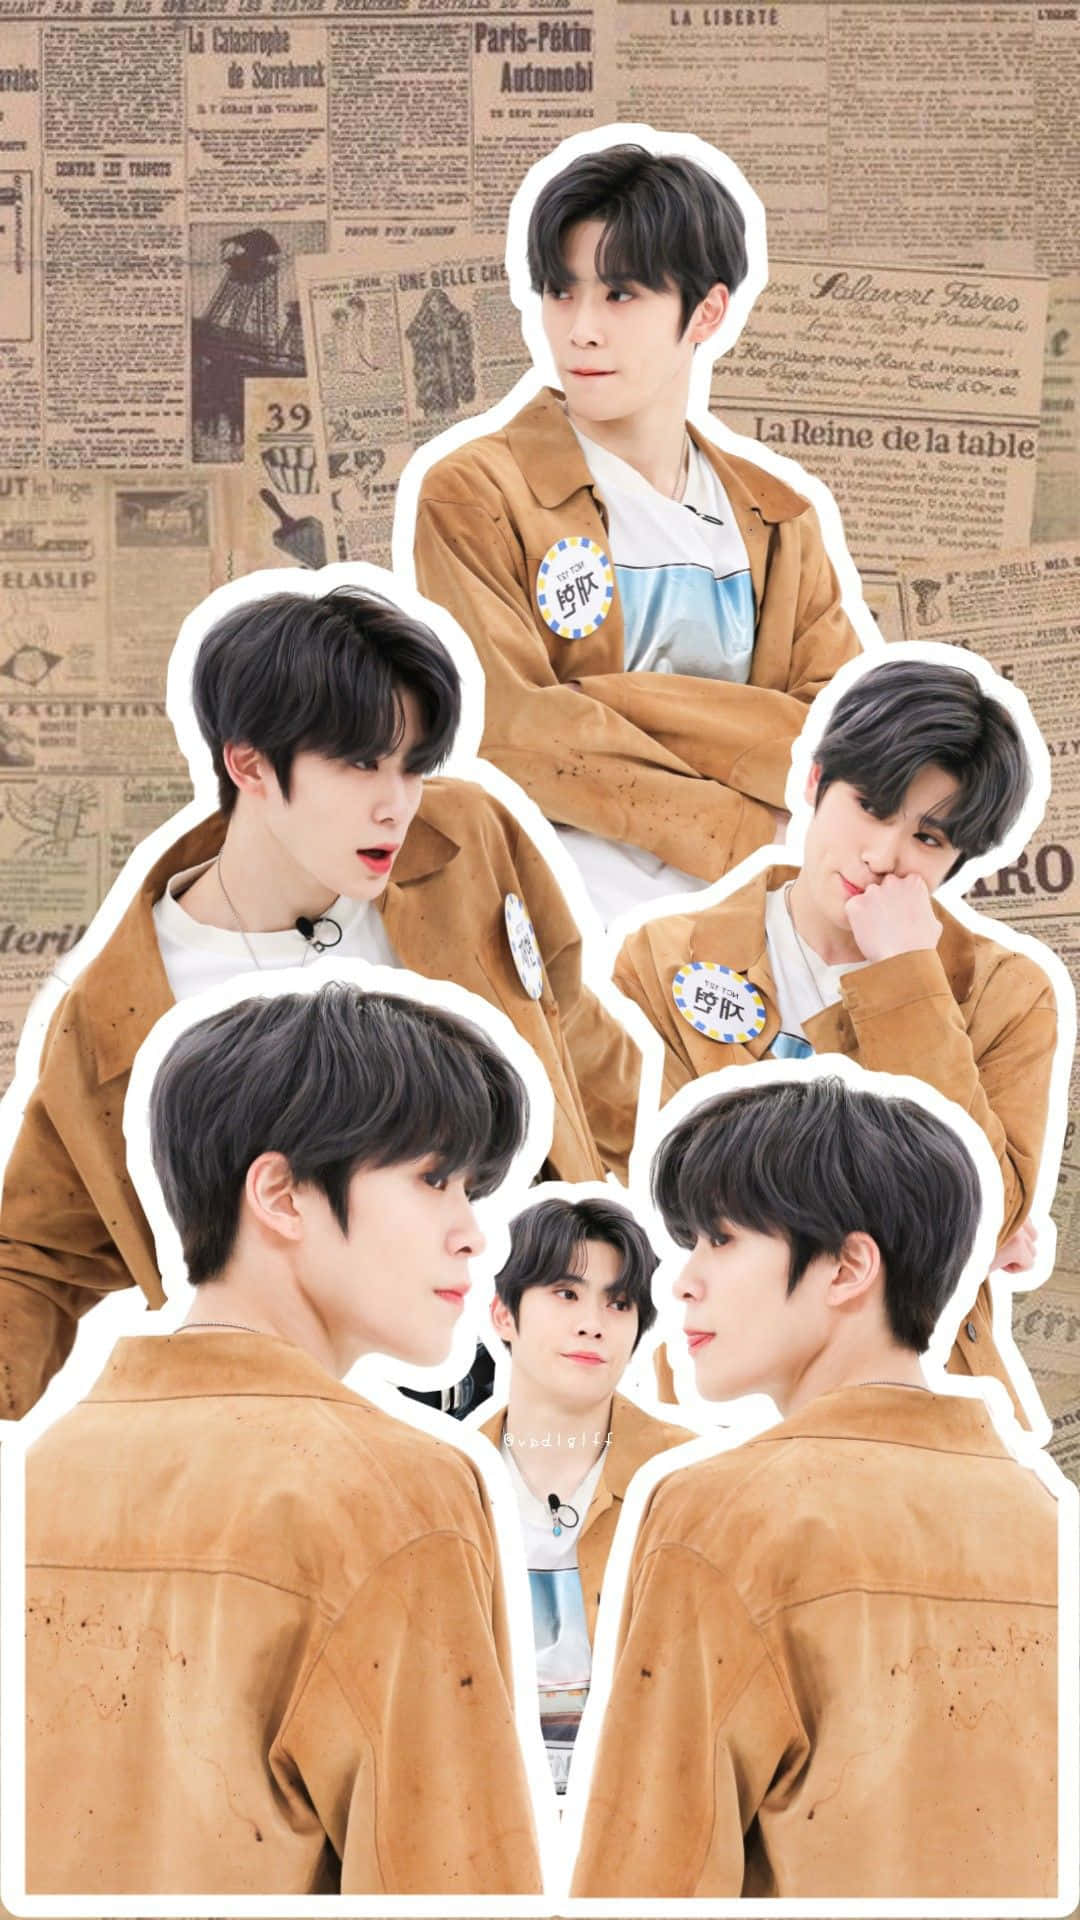 Nct Jaehyun Newspaper Background Collage